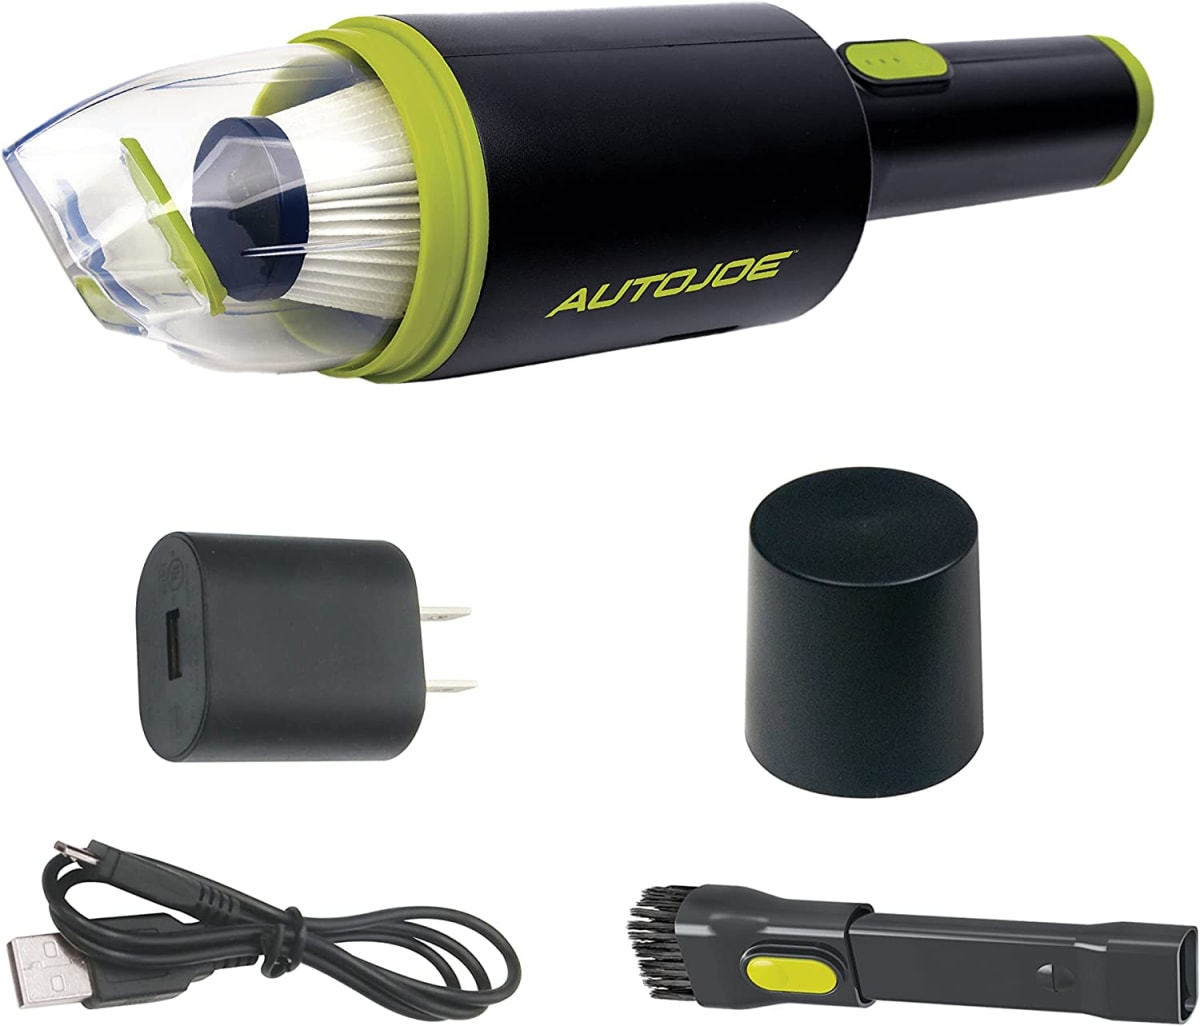 AJV1000 Handheld Cordless Vacuum Cleaner w Suction Power